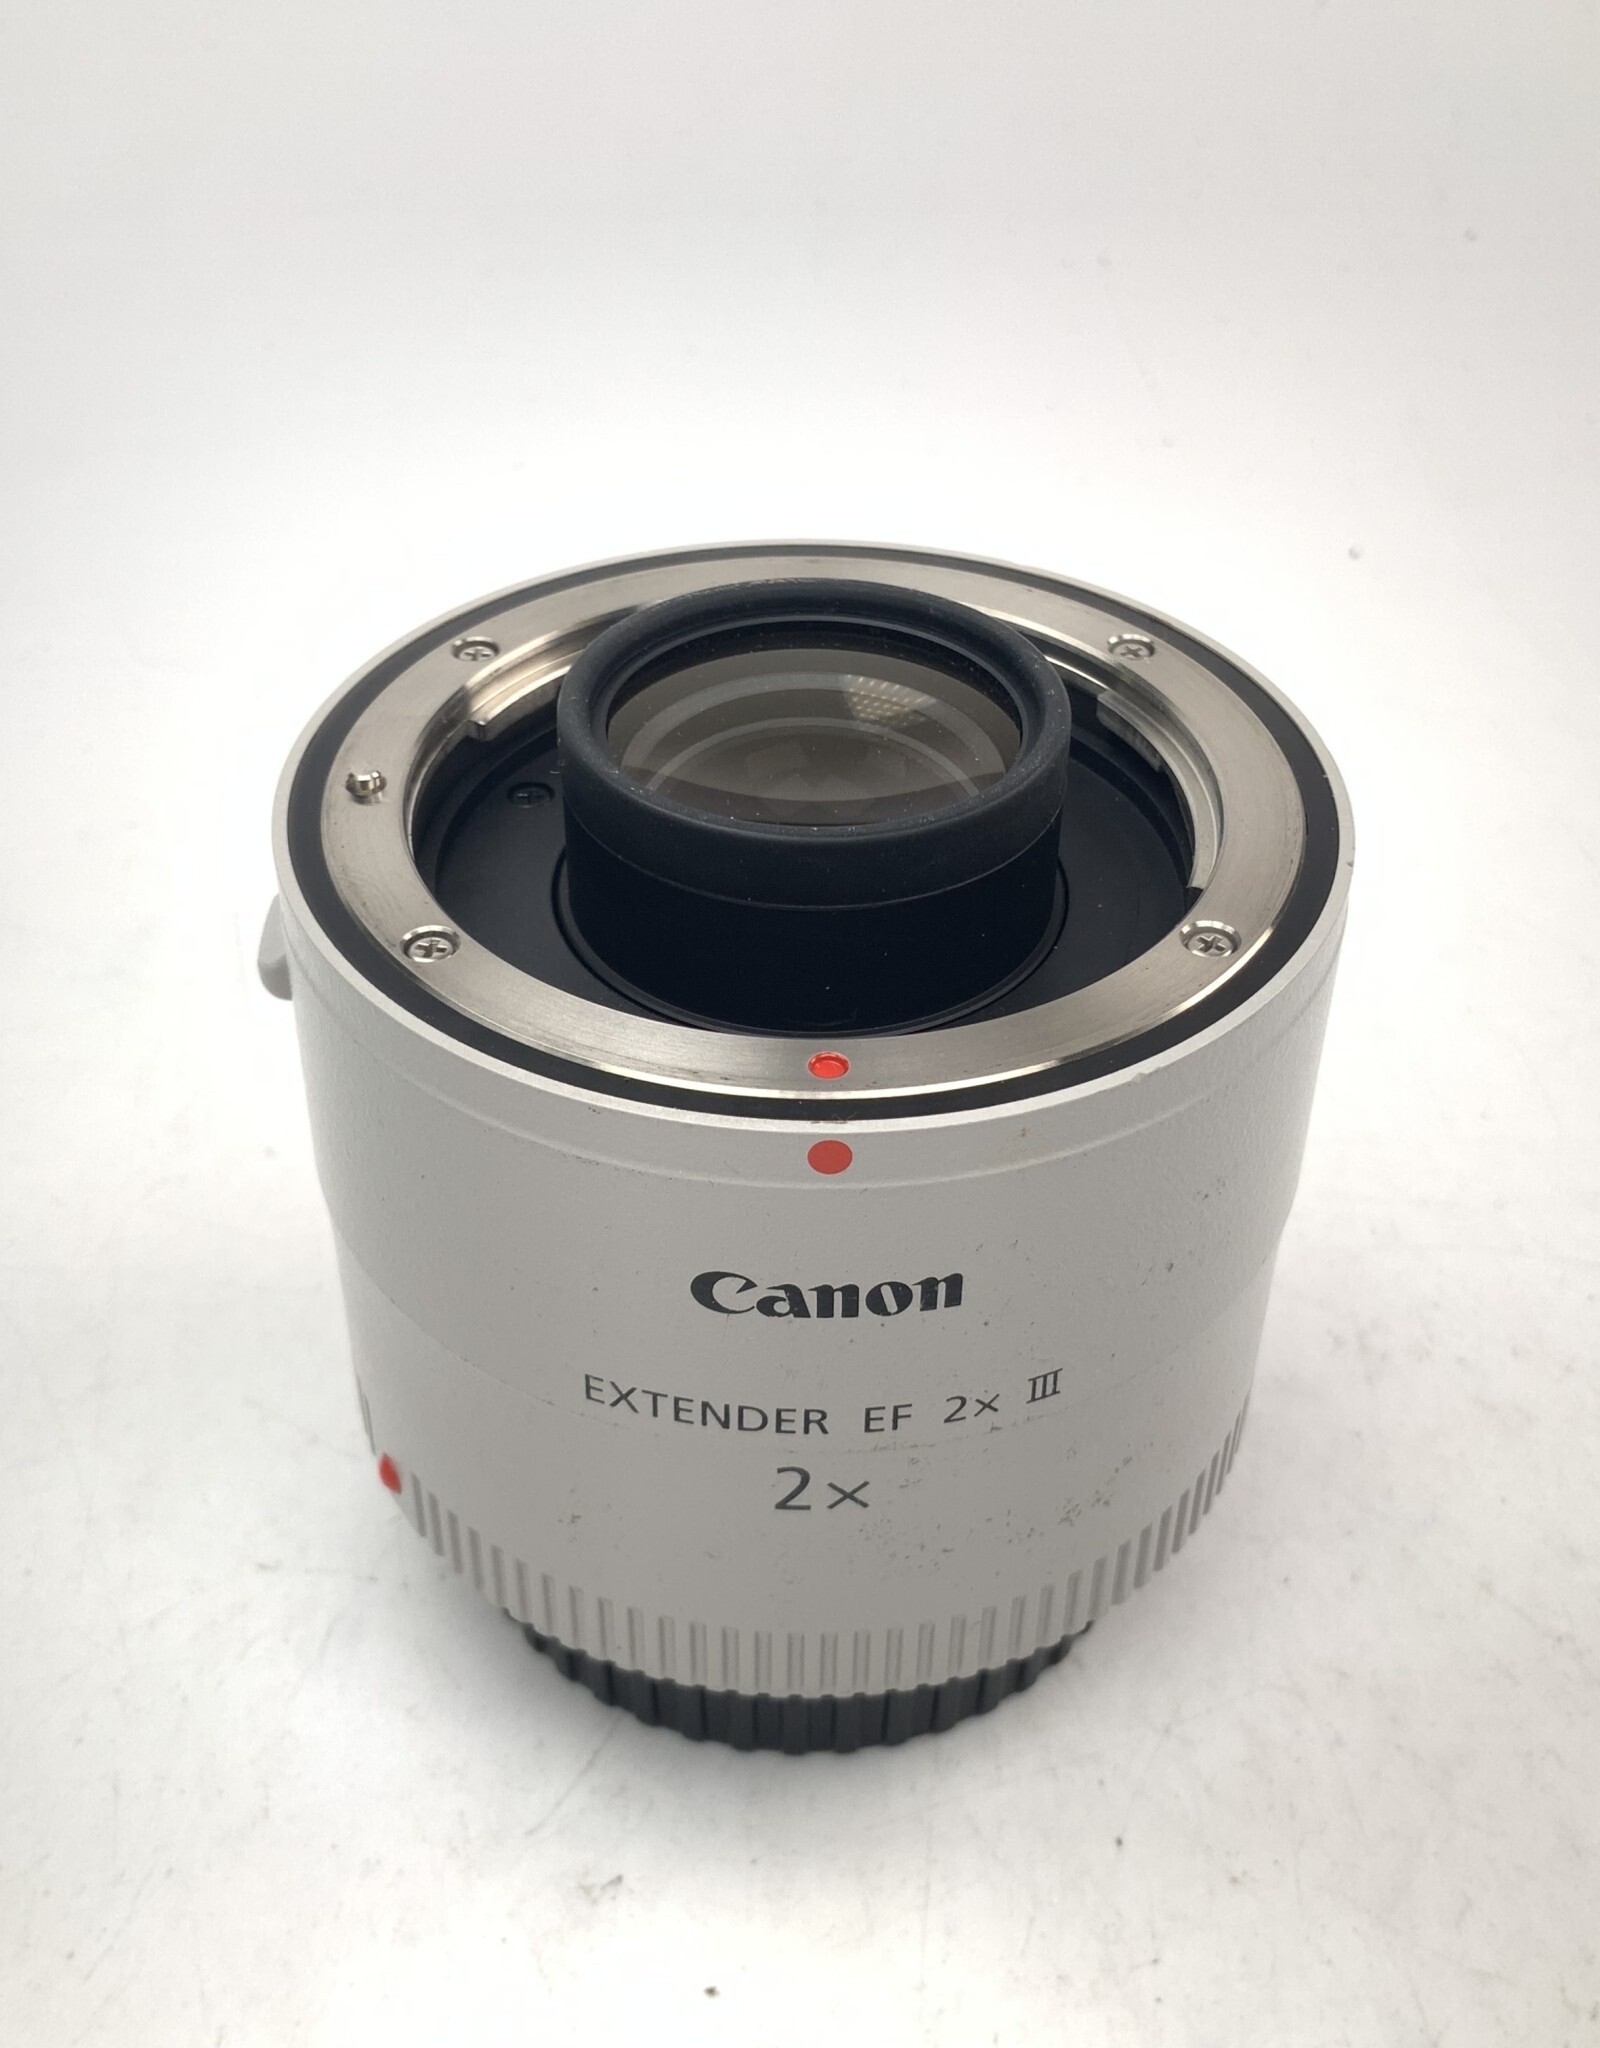 CANON Canon Extender EF 2X III Teleconverter Lens Used Good